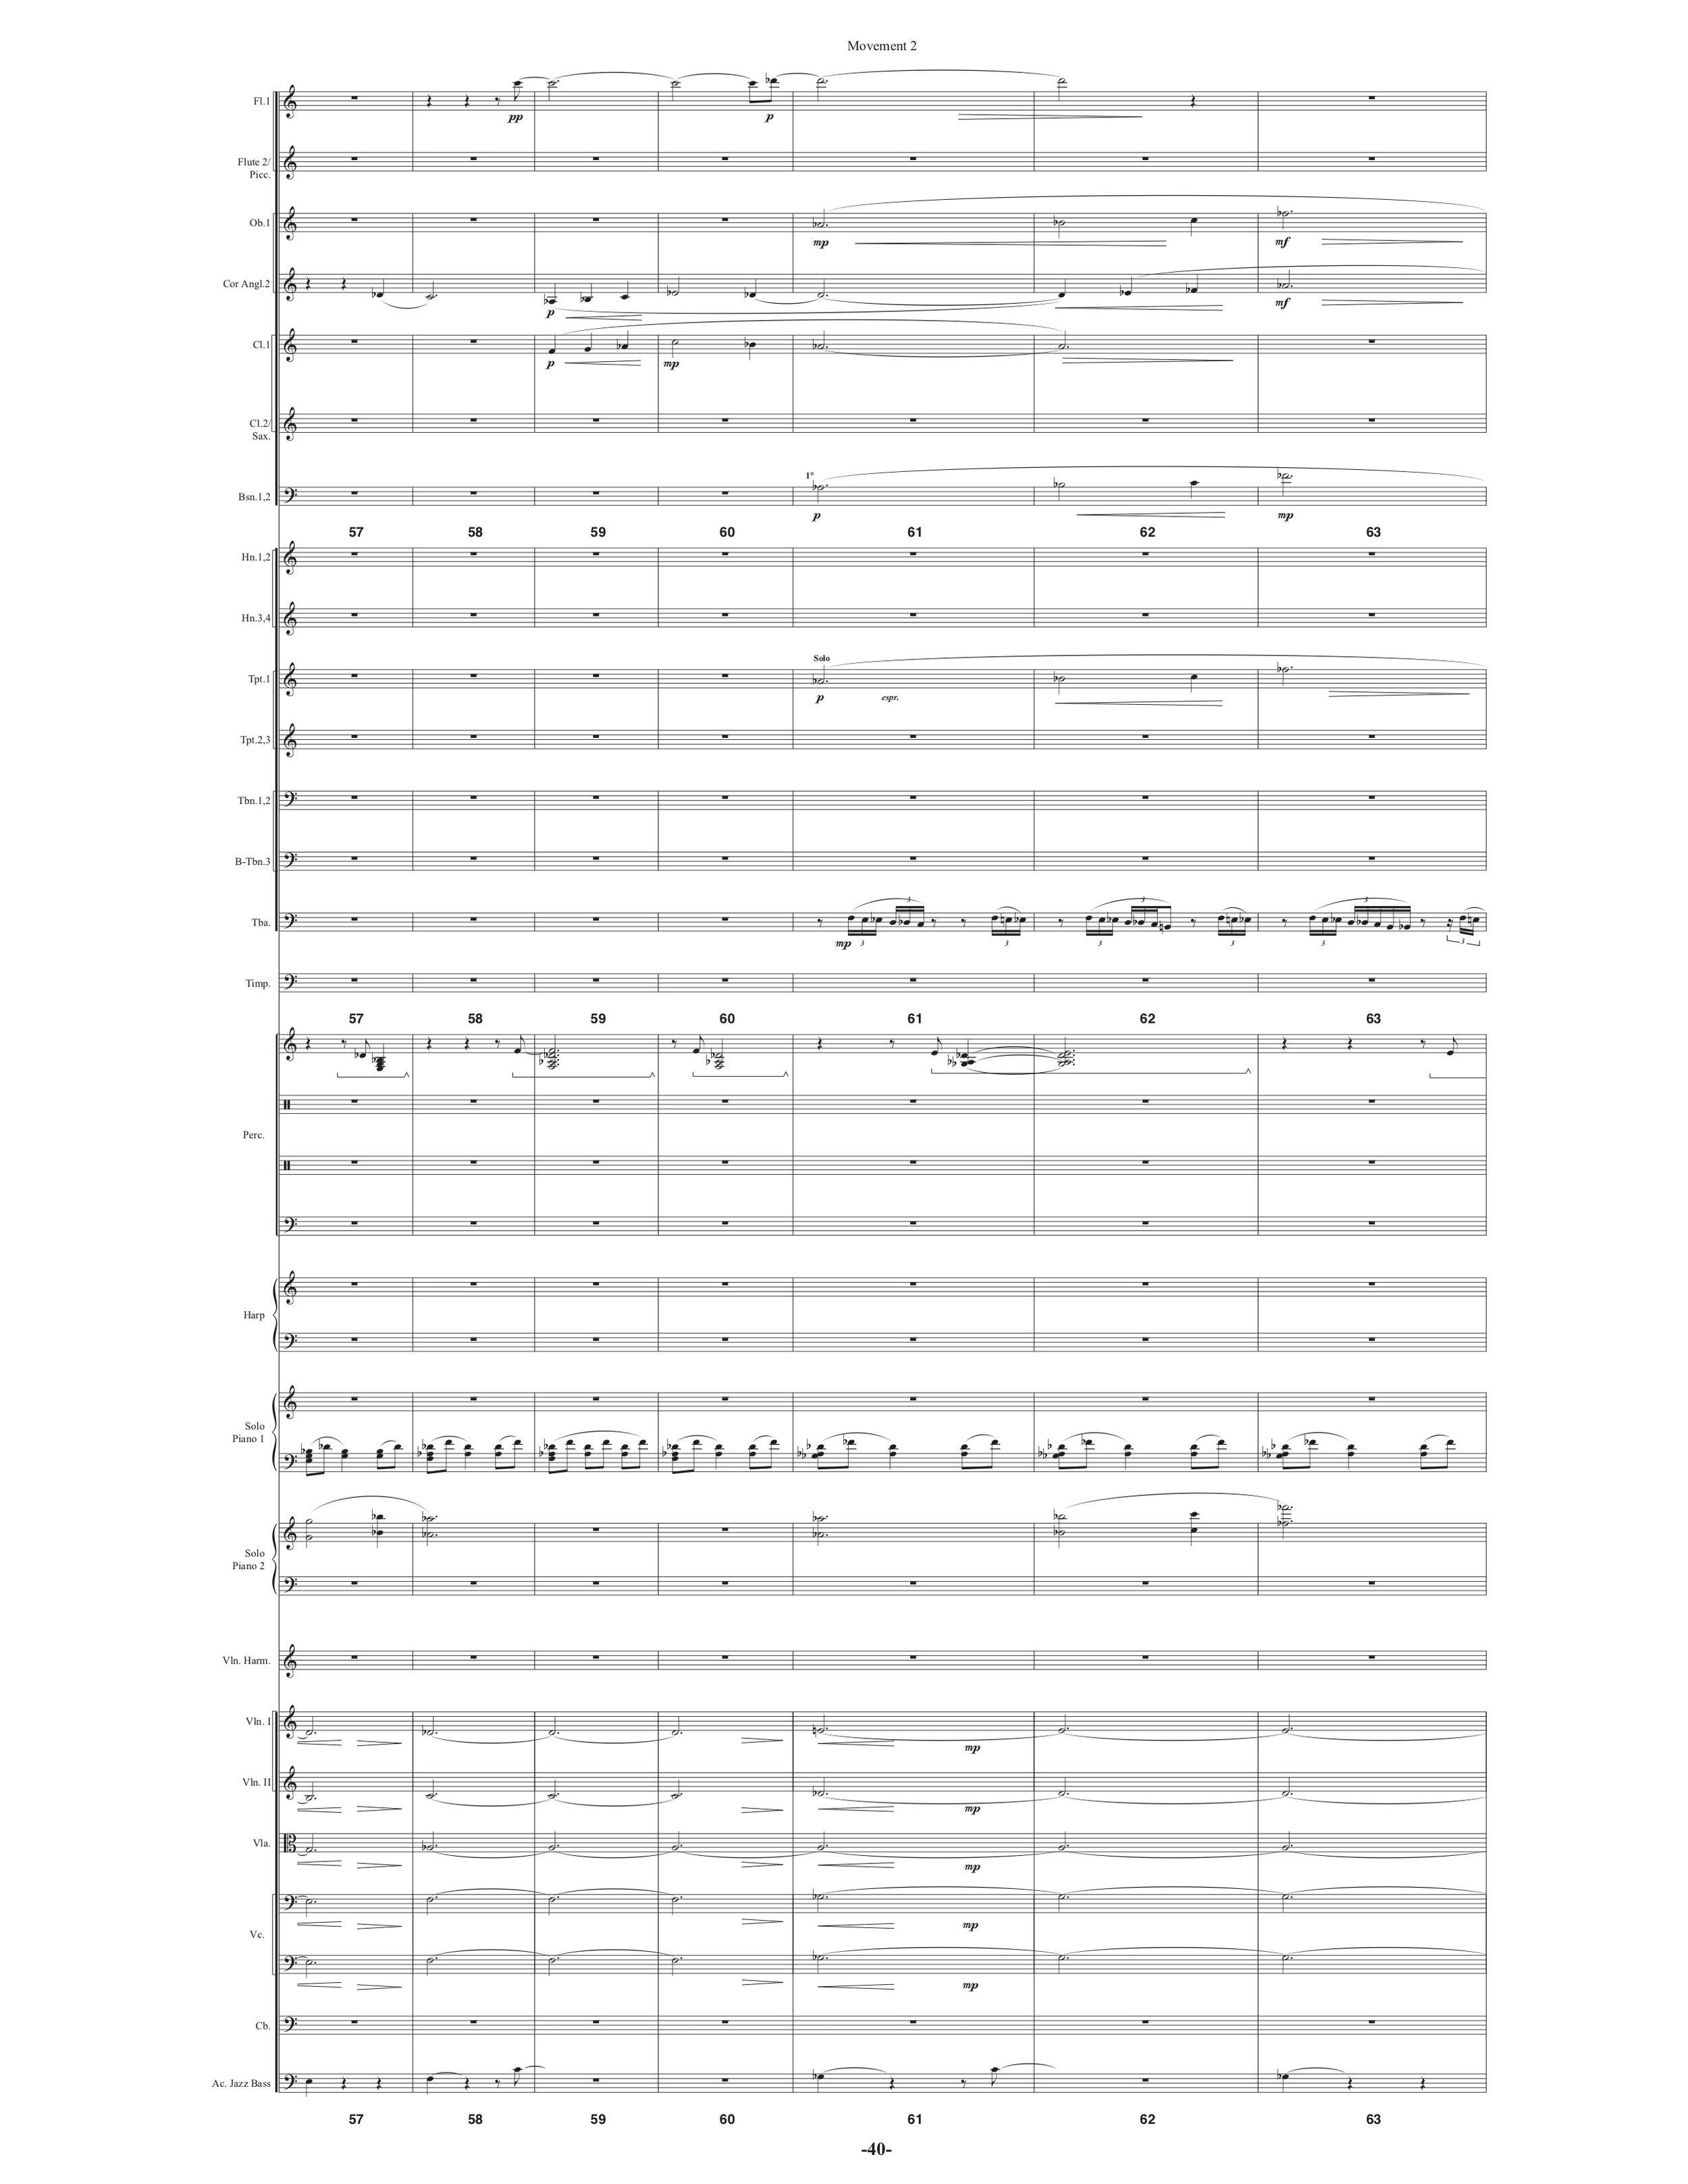 Symphony_Orch & 2 Pianos p45.jpg